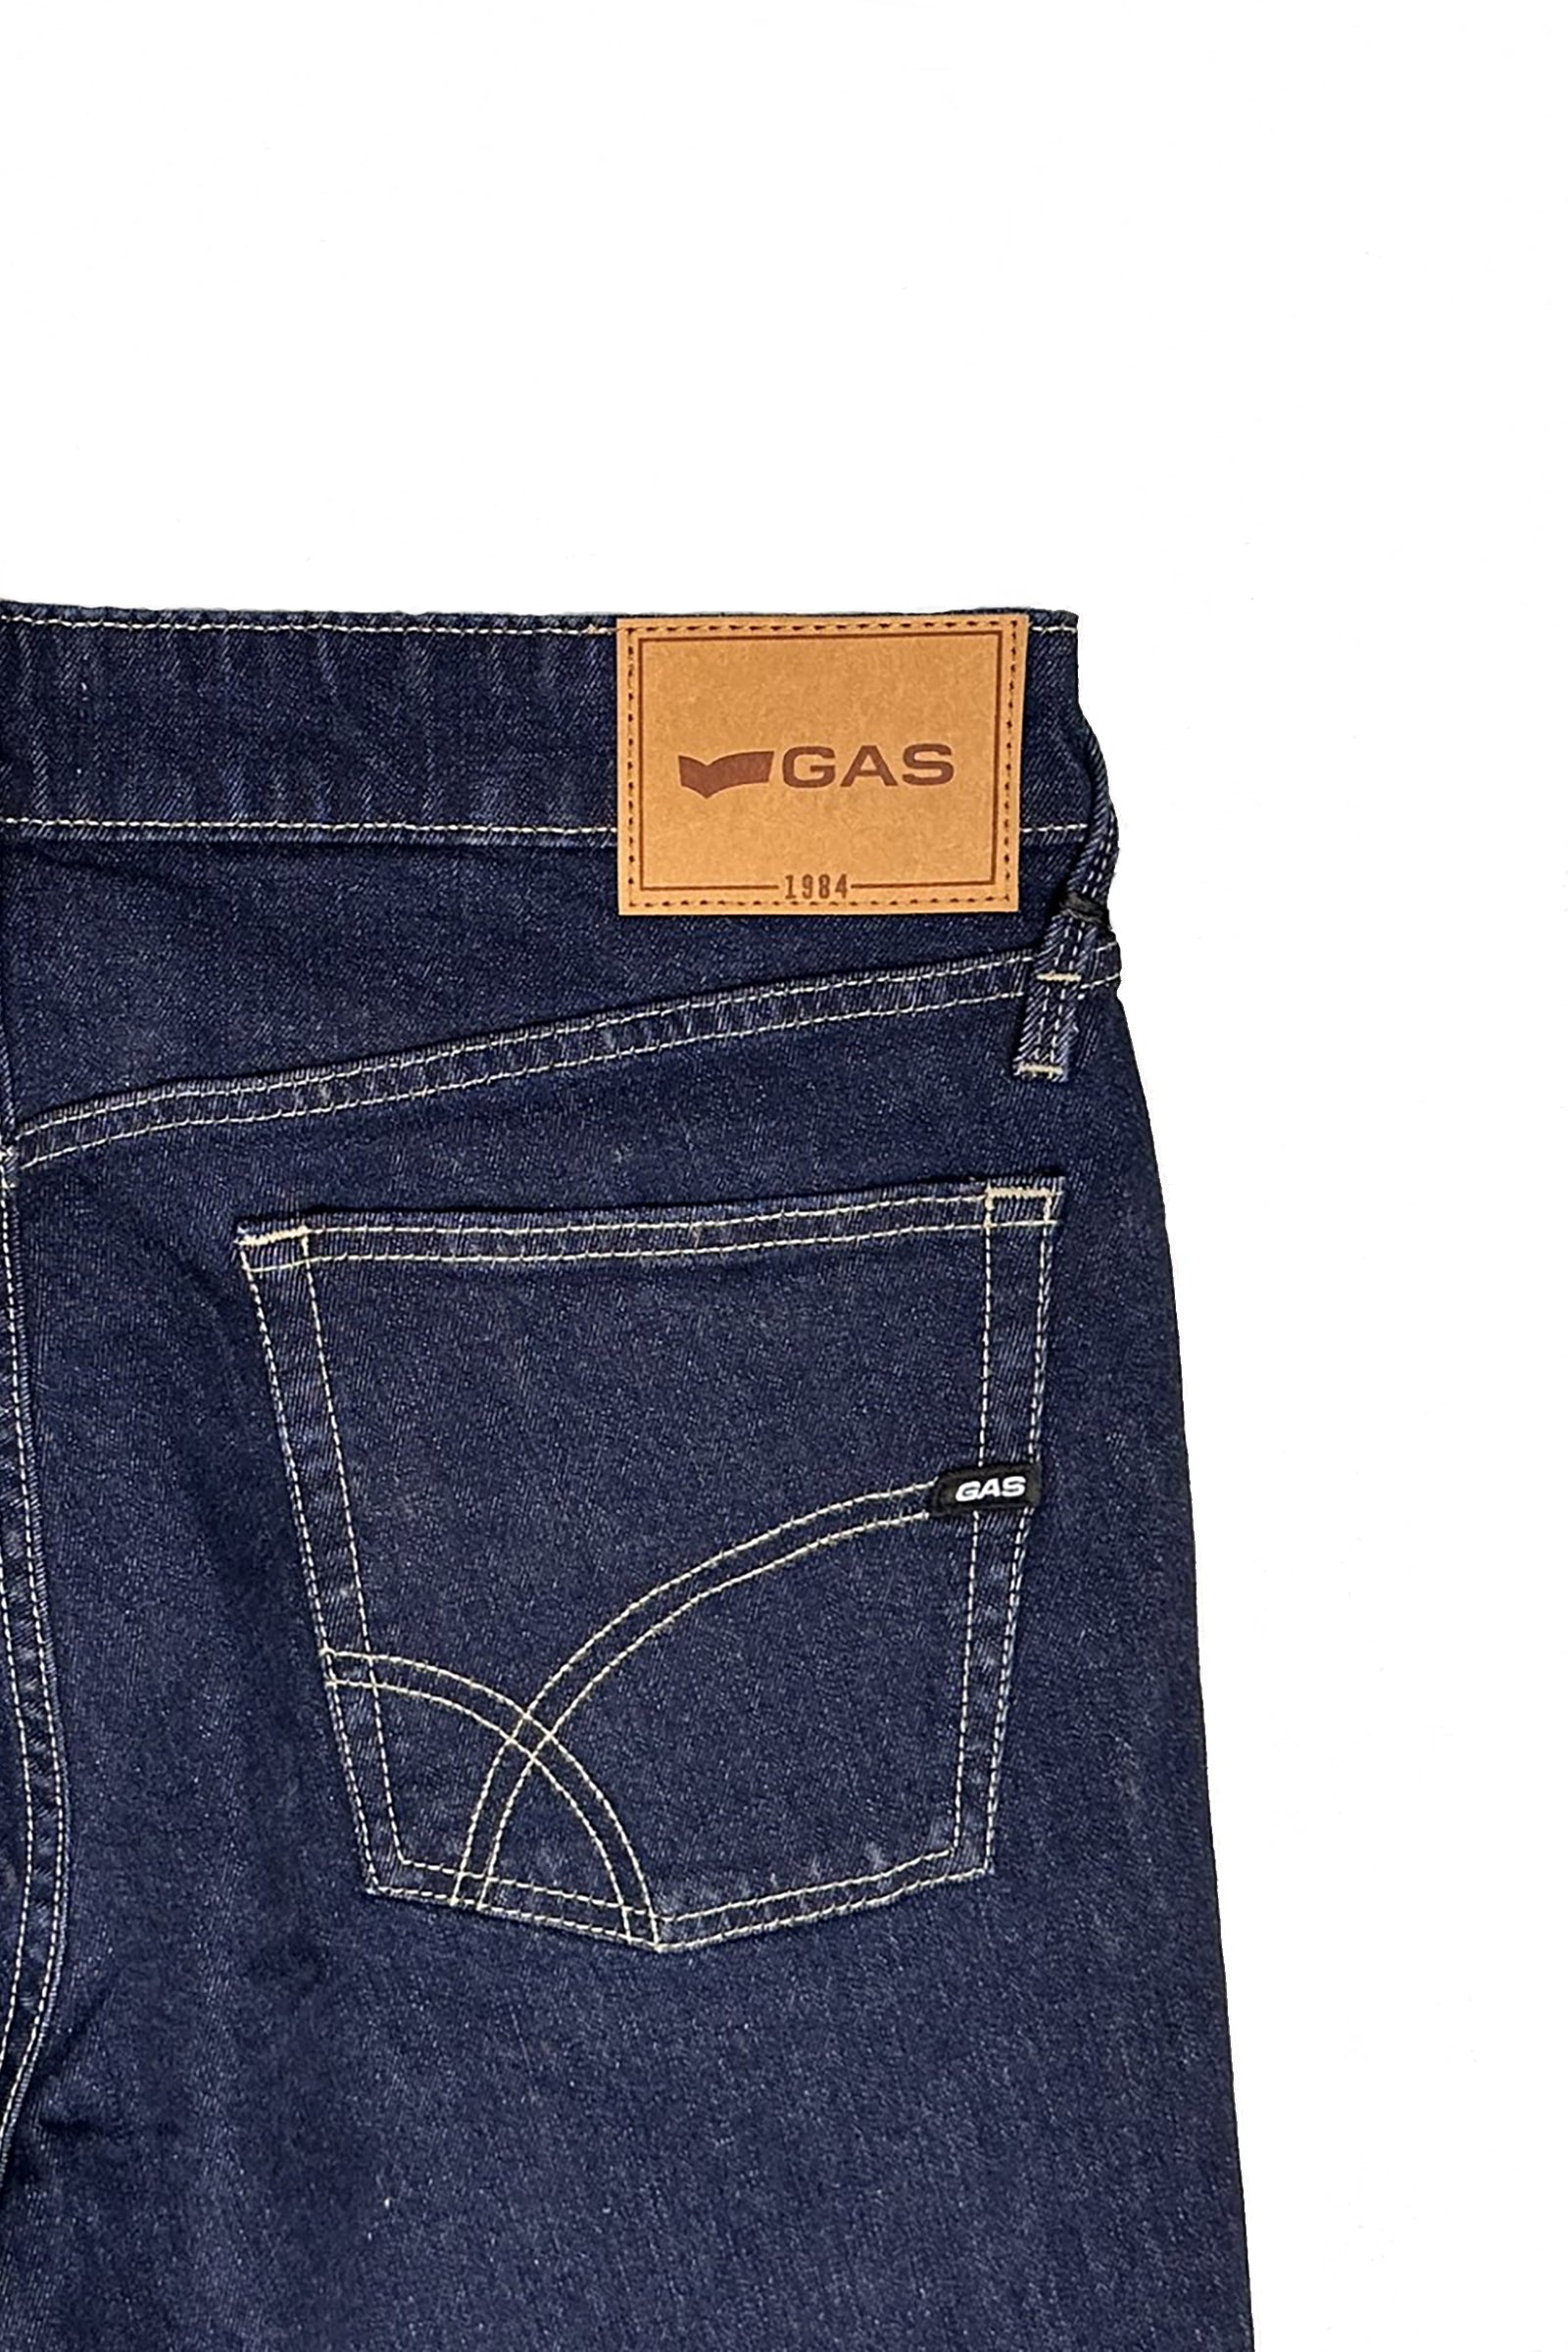 Albert Simple Rev 5 Pocket in Raw Rinse Jeans GAS   